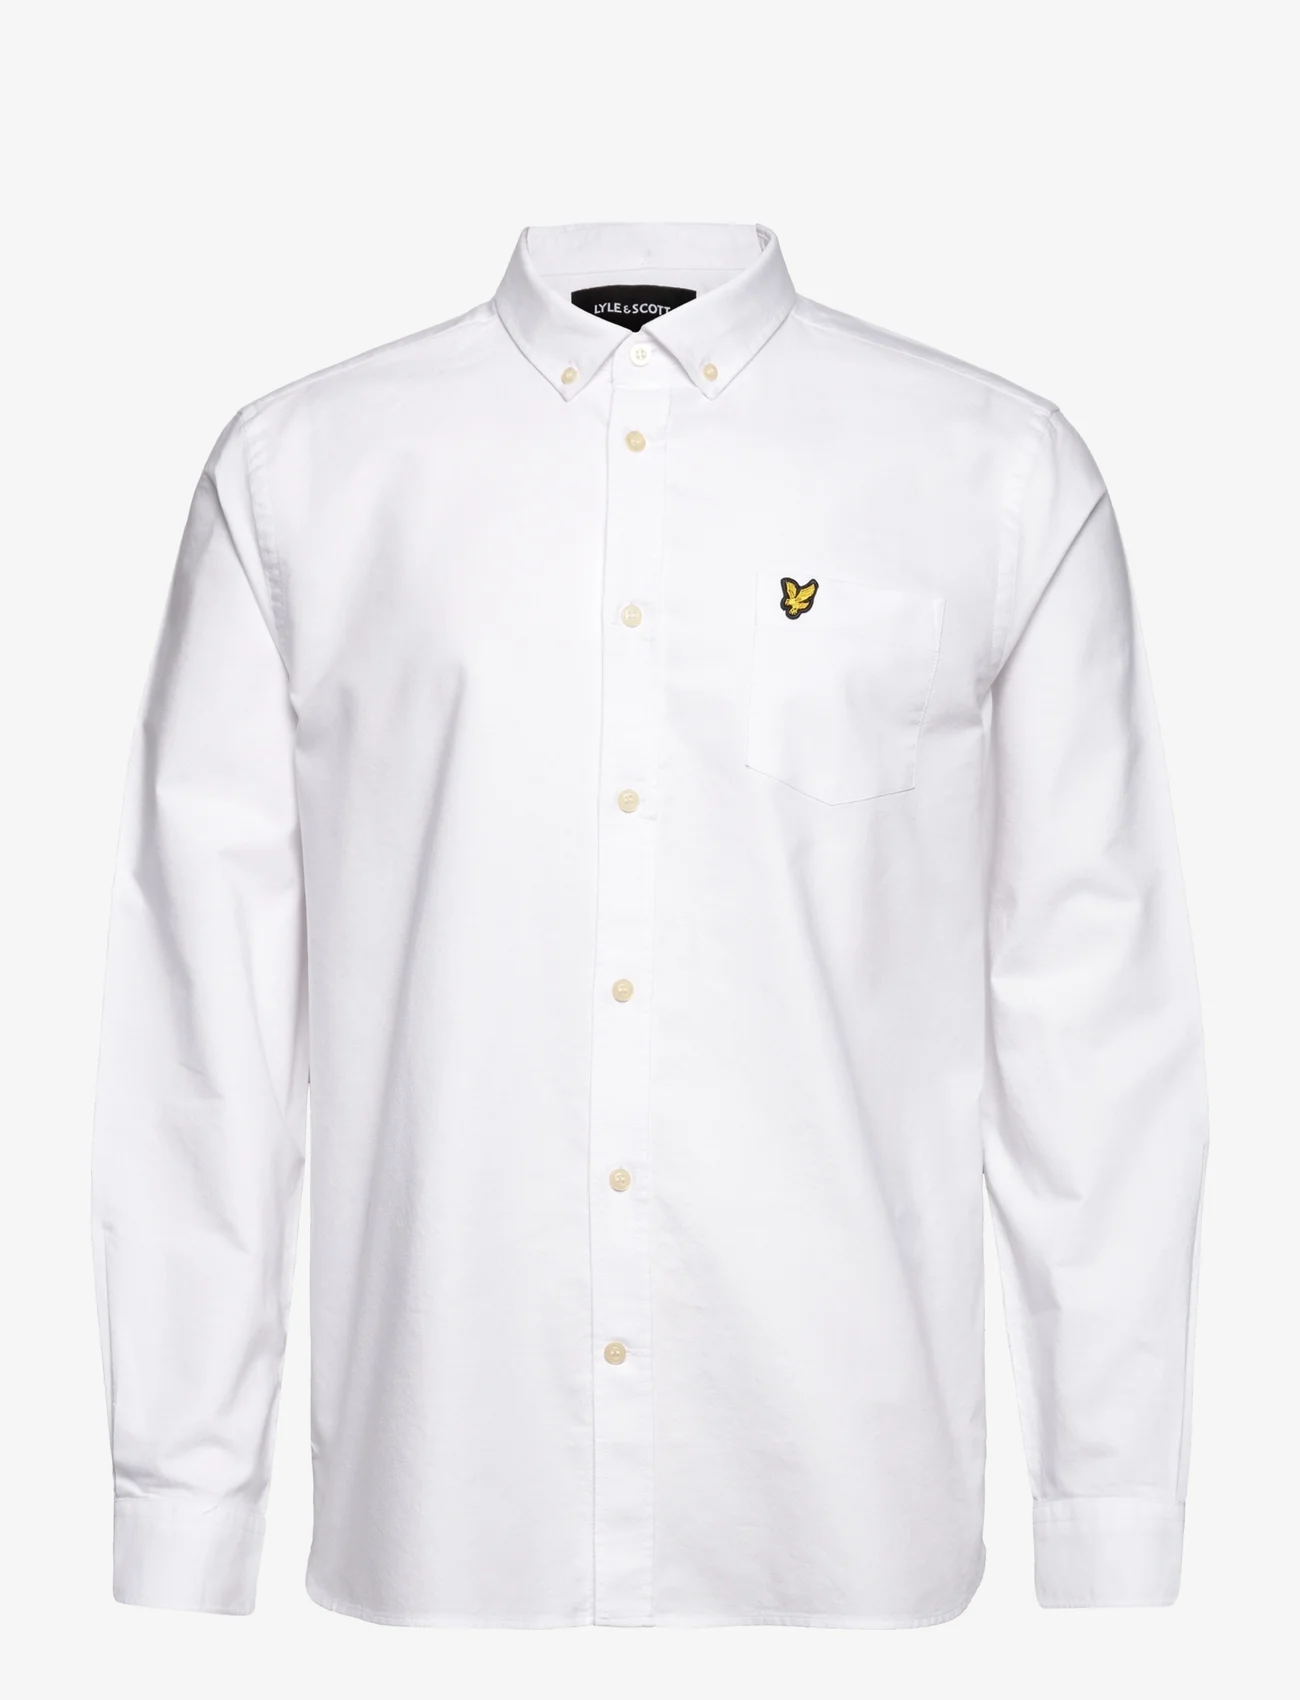 Lyle & Scott - Regular Fit Light Weight Oxford Shirt - oxford skjorter - white - 0